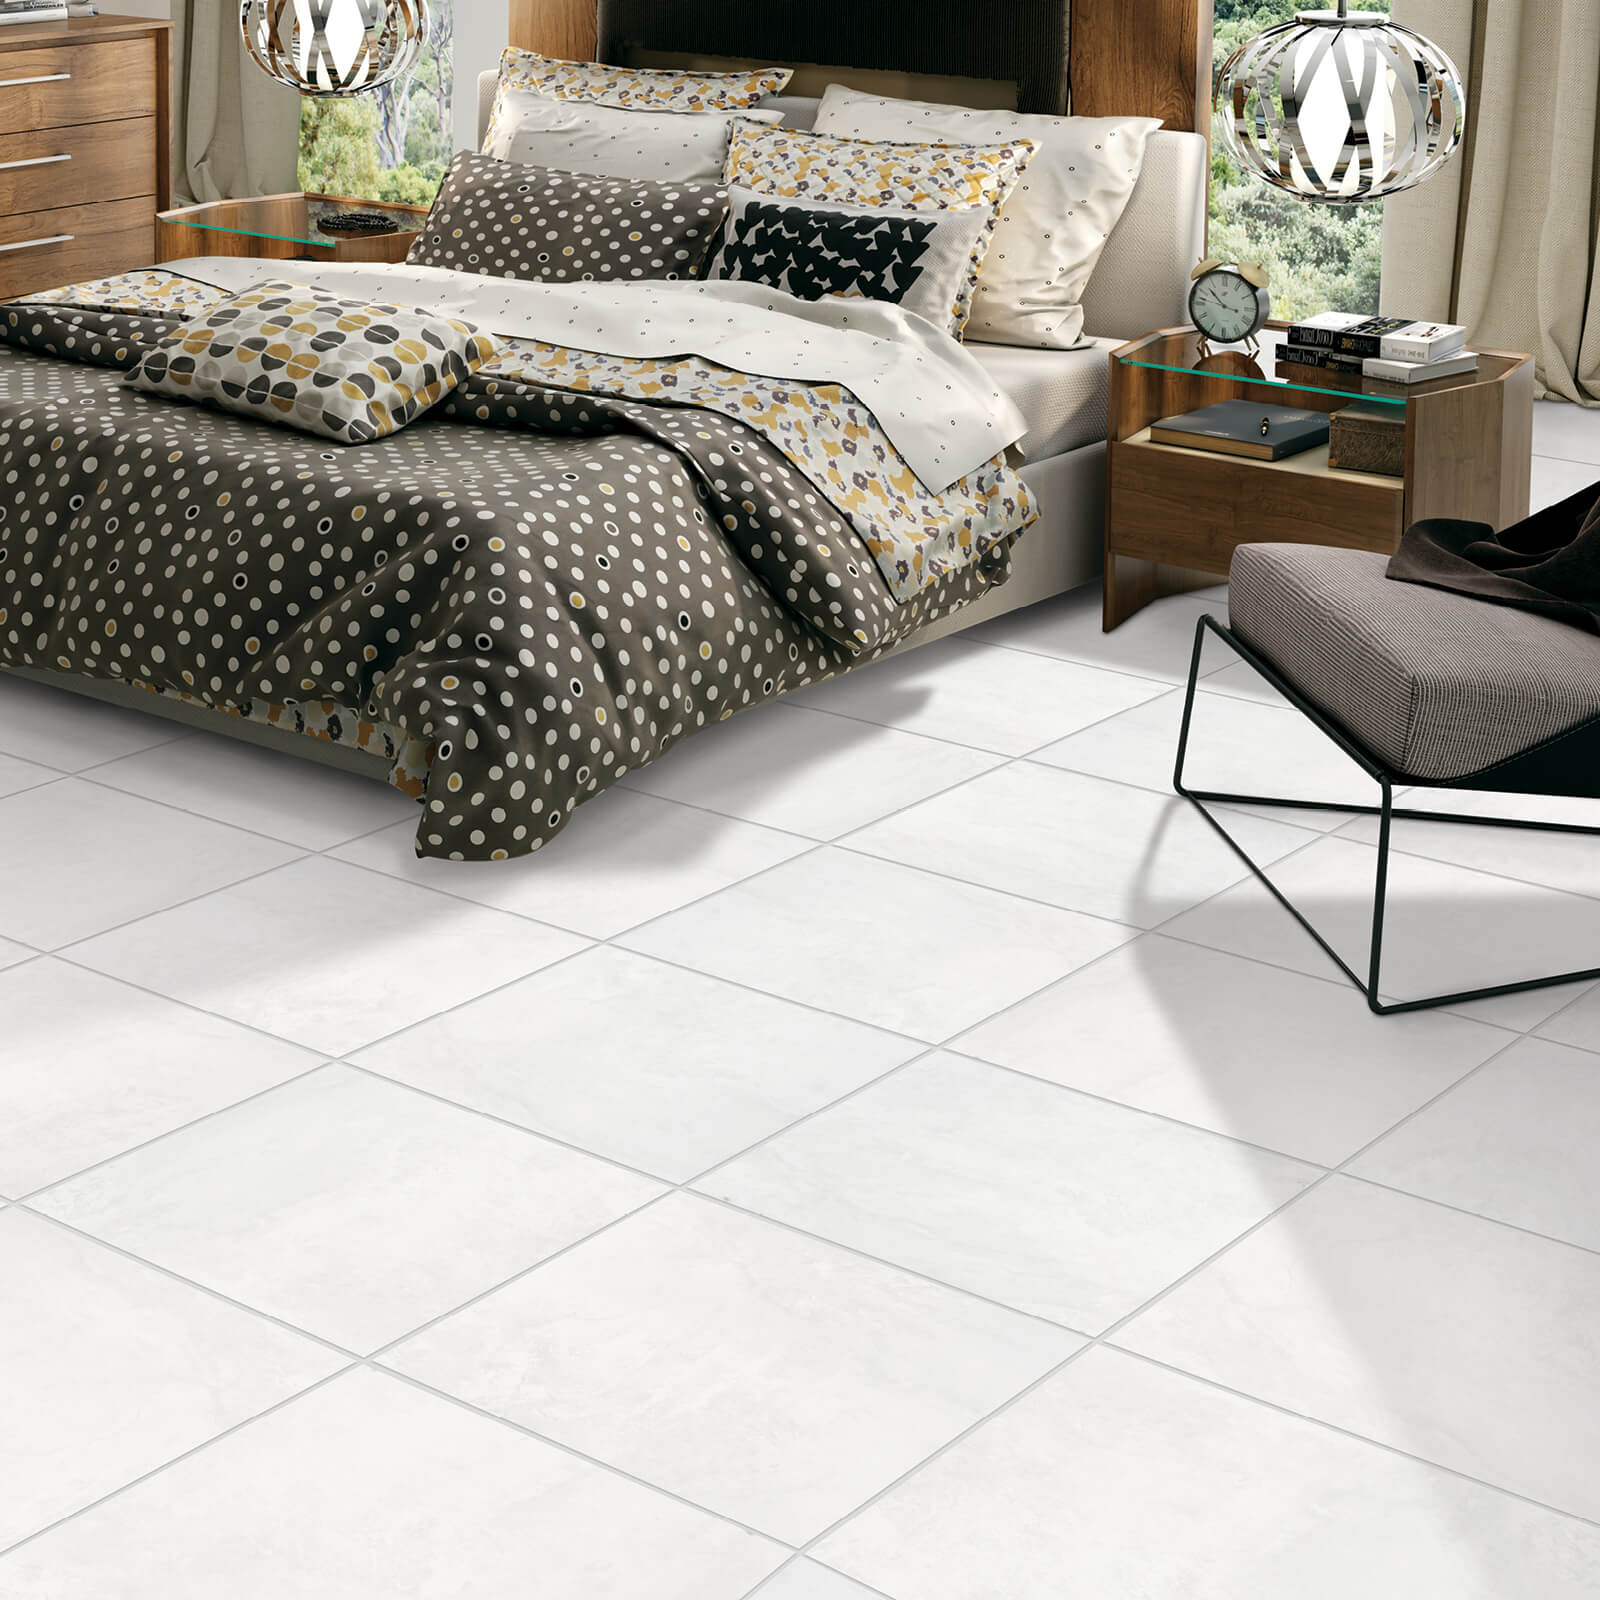 Bedroom flooring | McSwain Carpet & Floors